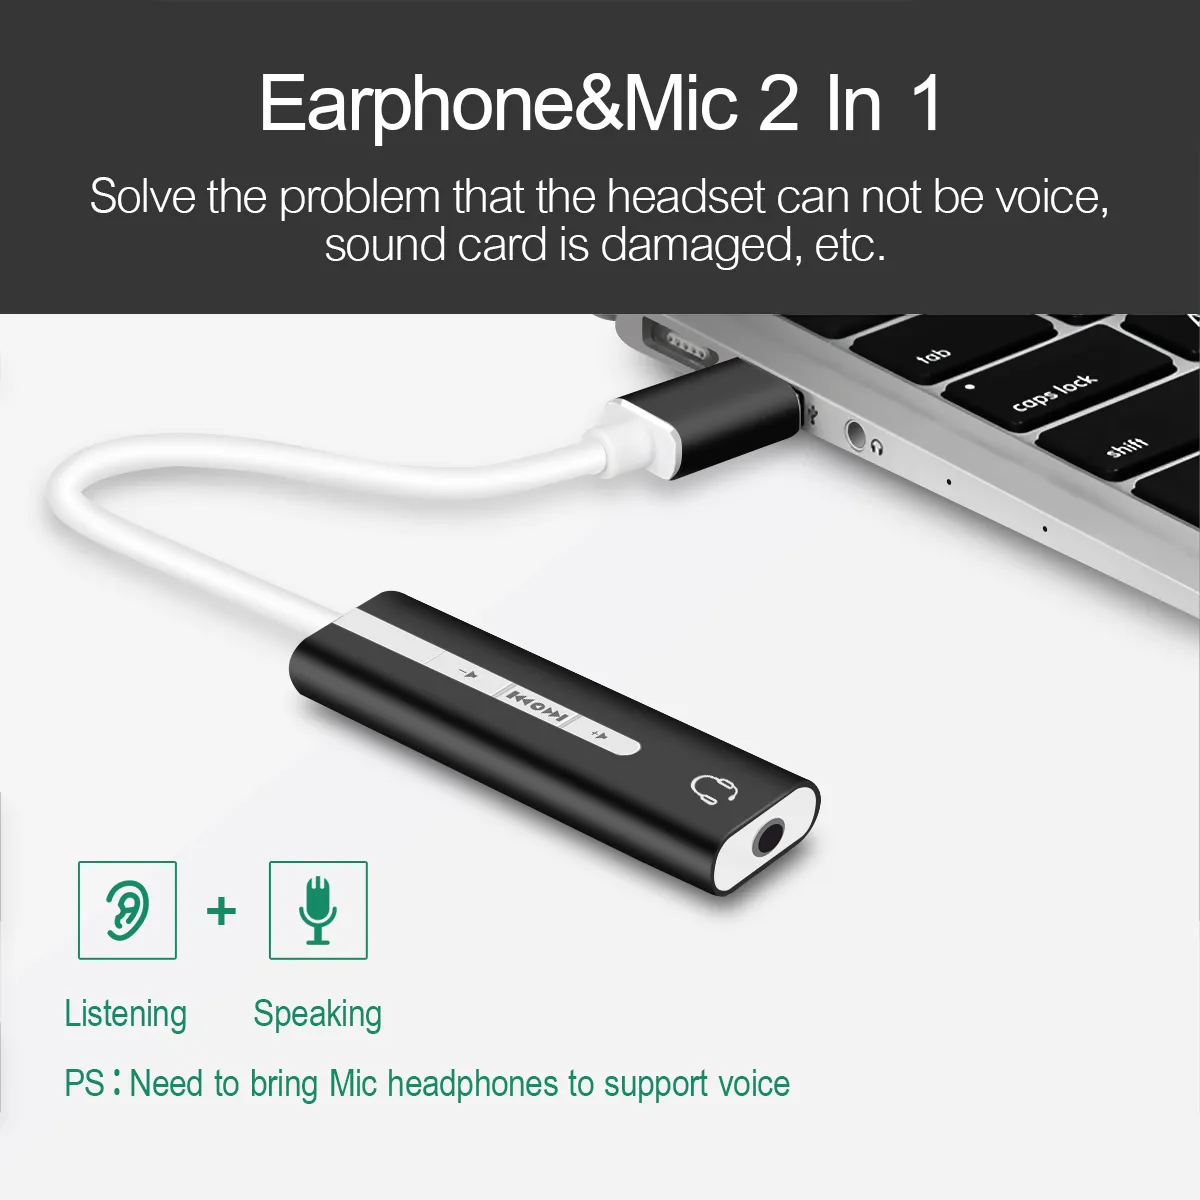 USB HUB 2 IN 1 USB Externe Soundkarte C / 3,0 bis 3,5 mm Klinke Audio Mikrofon Kopfhörer Adapter für MacBook PC Laptop